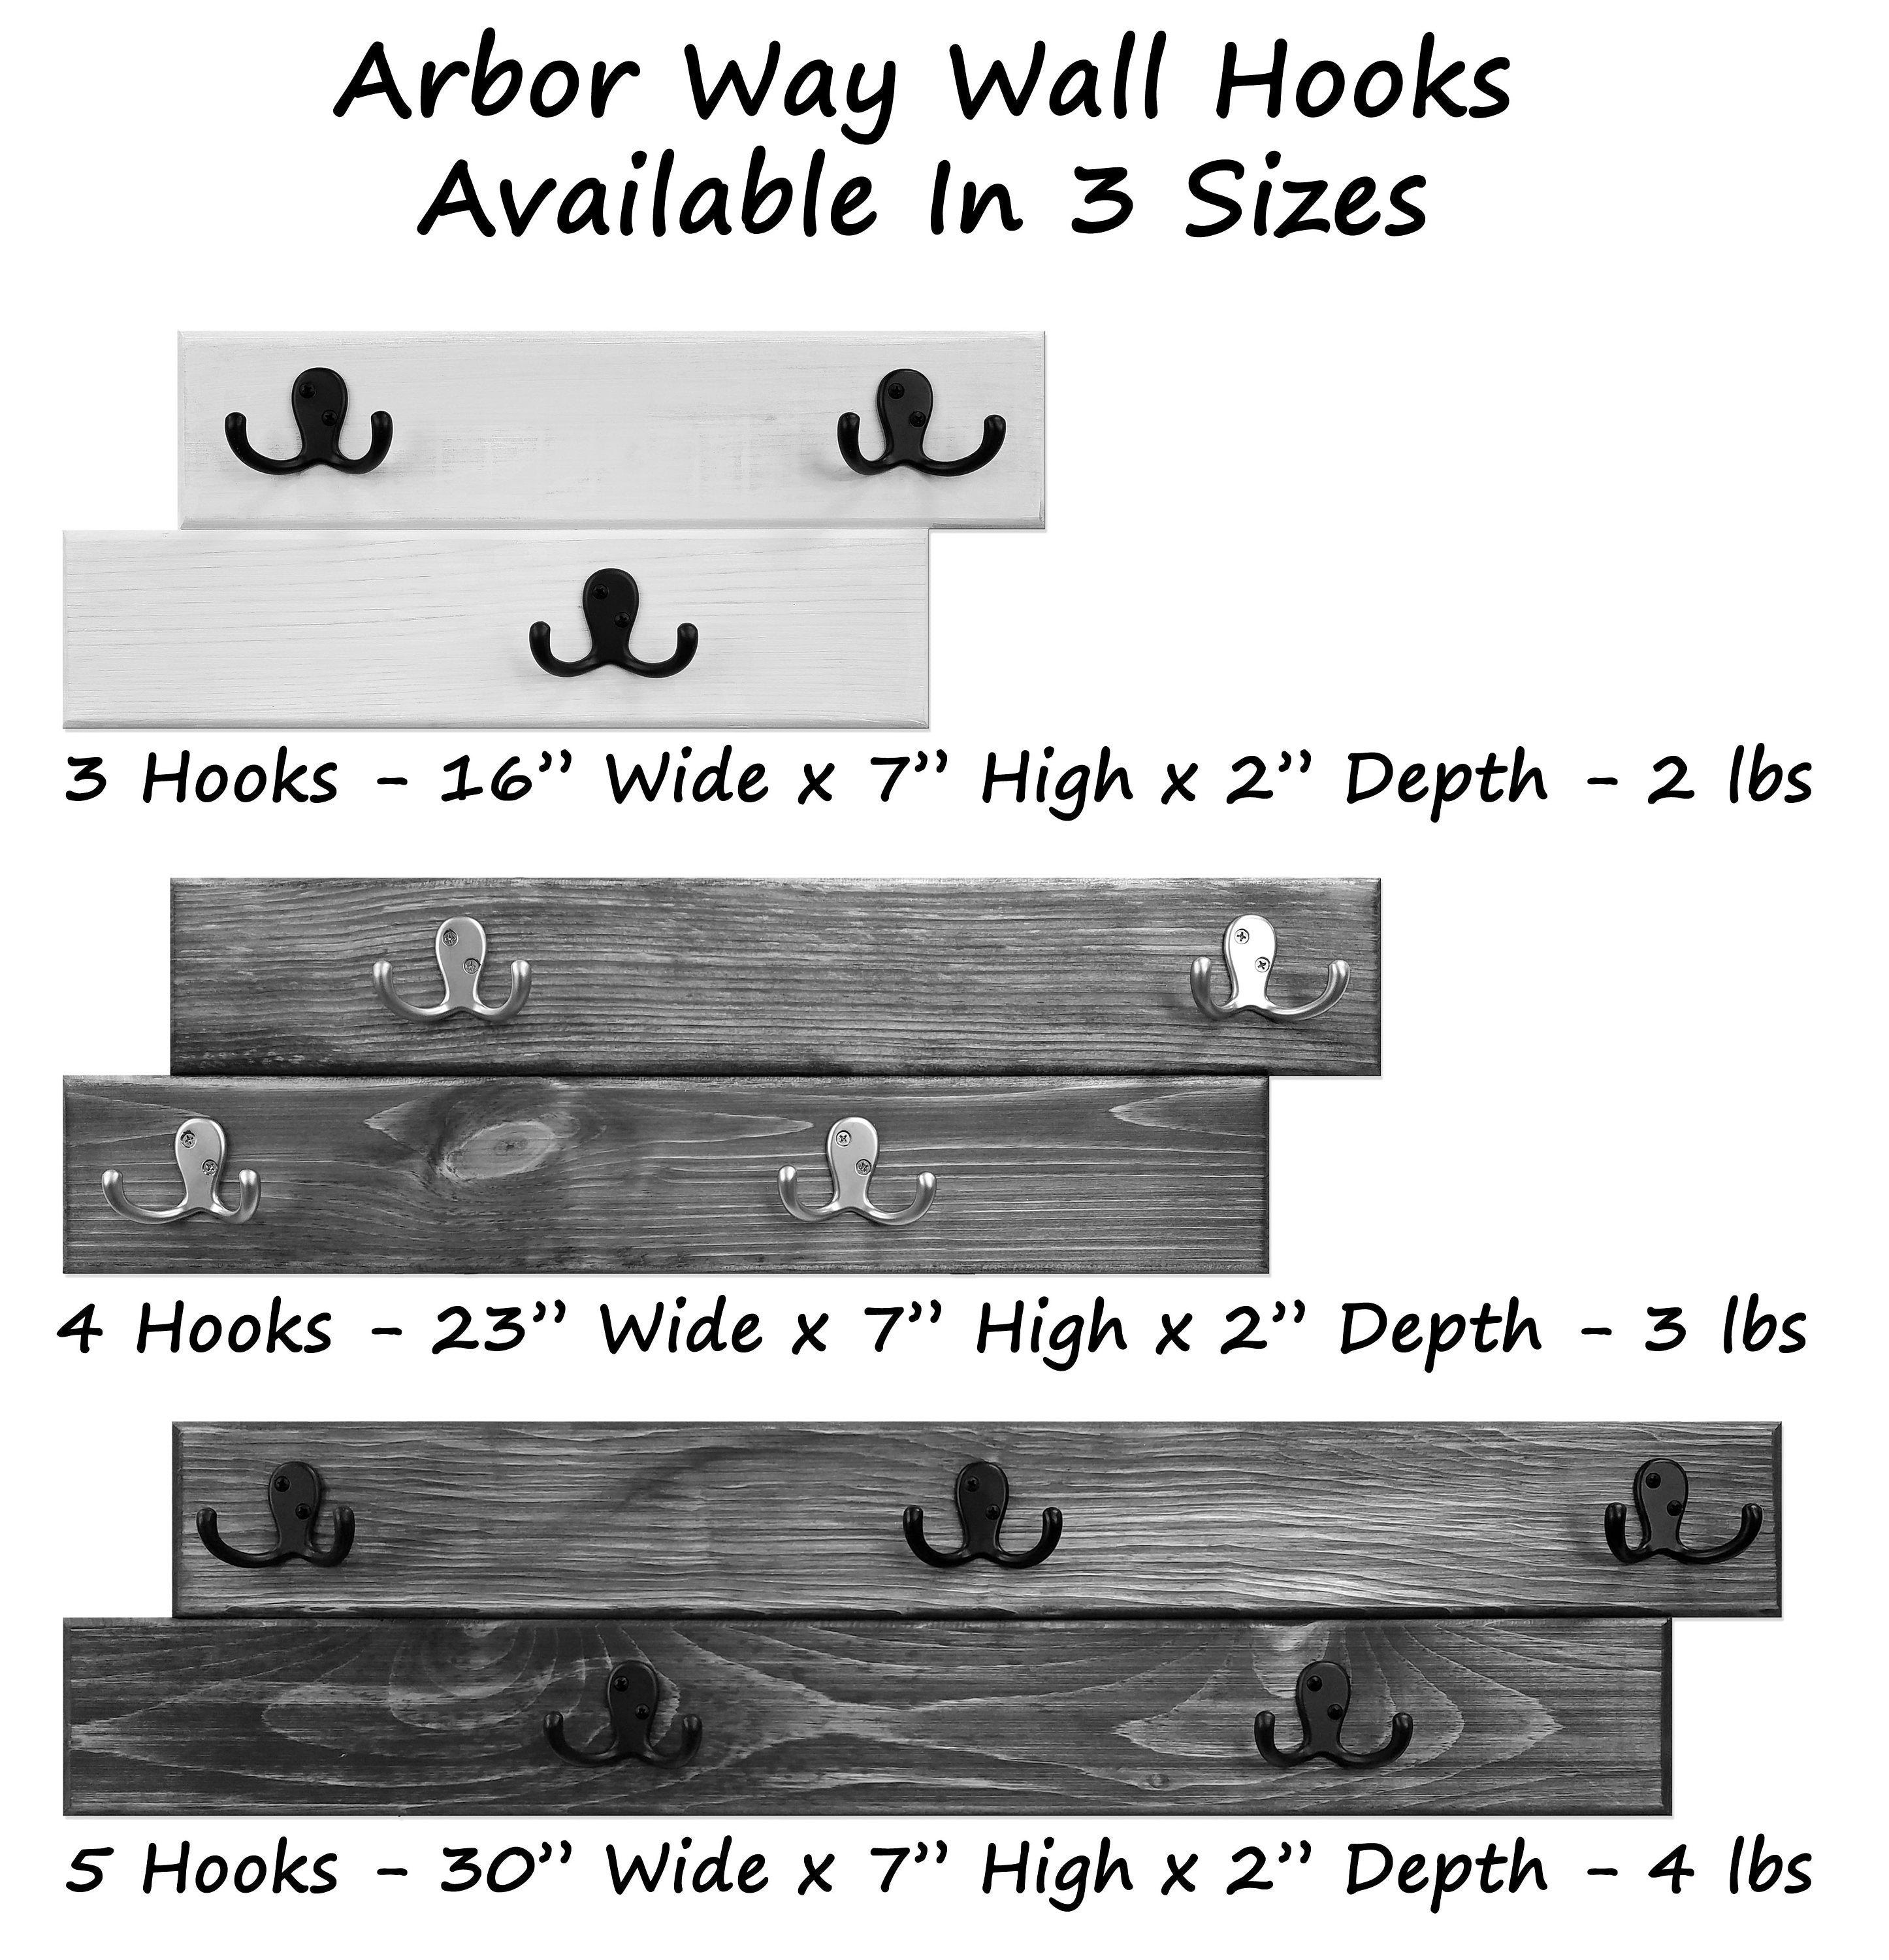 Arbor Way Wall Hooks 3 Sizes